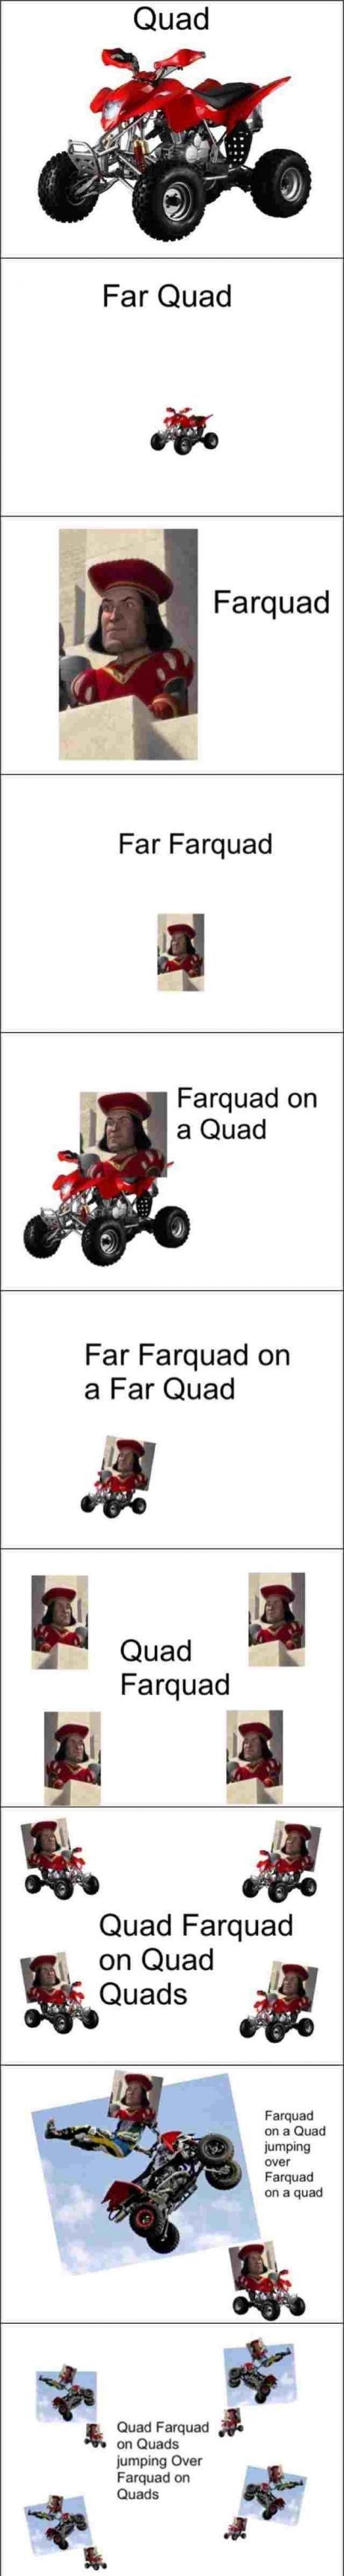 farquad on quads, on wait what? - meme